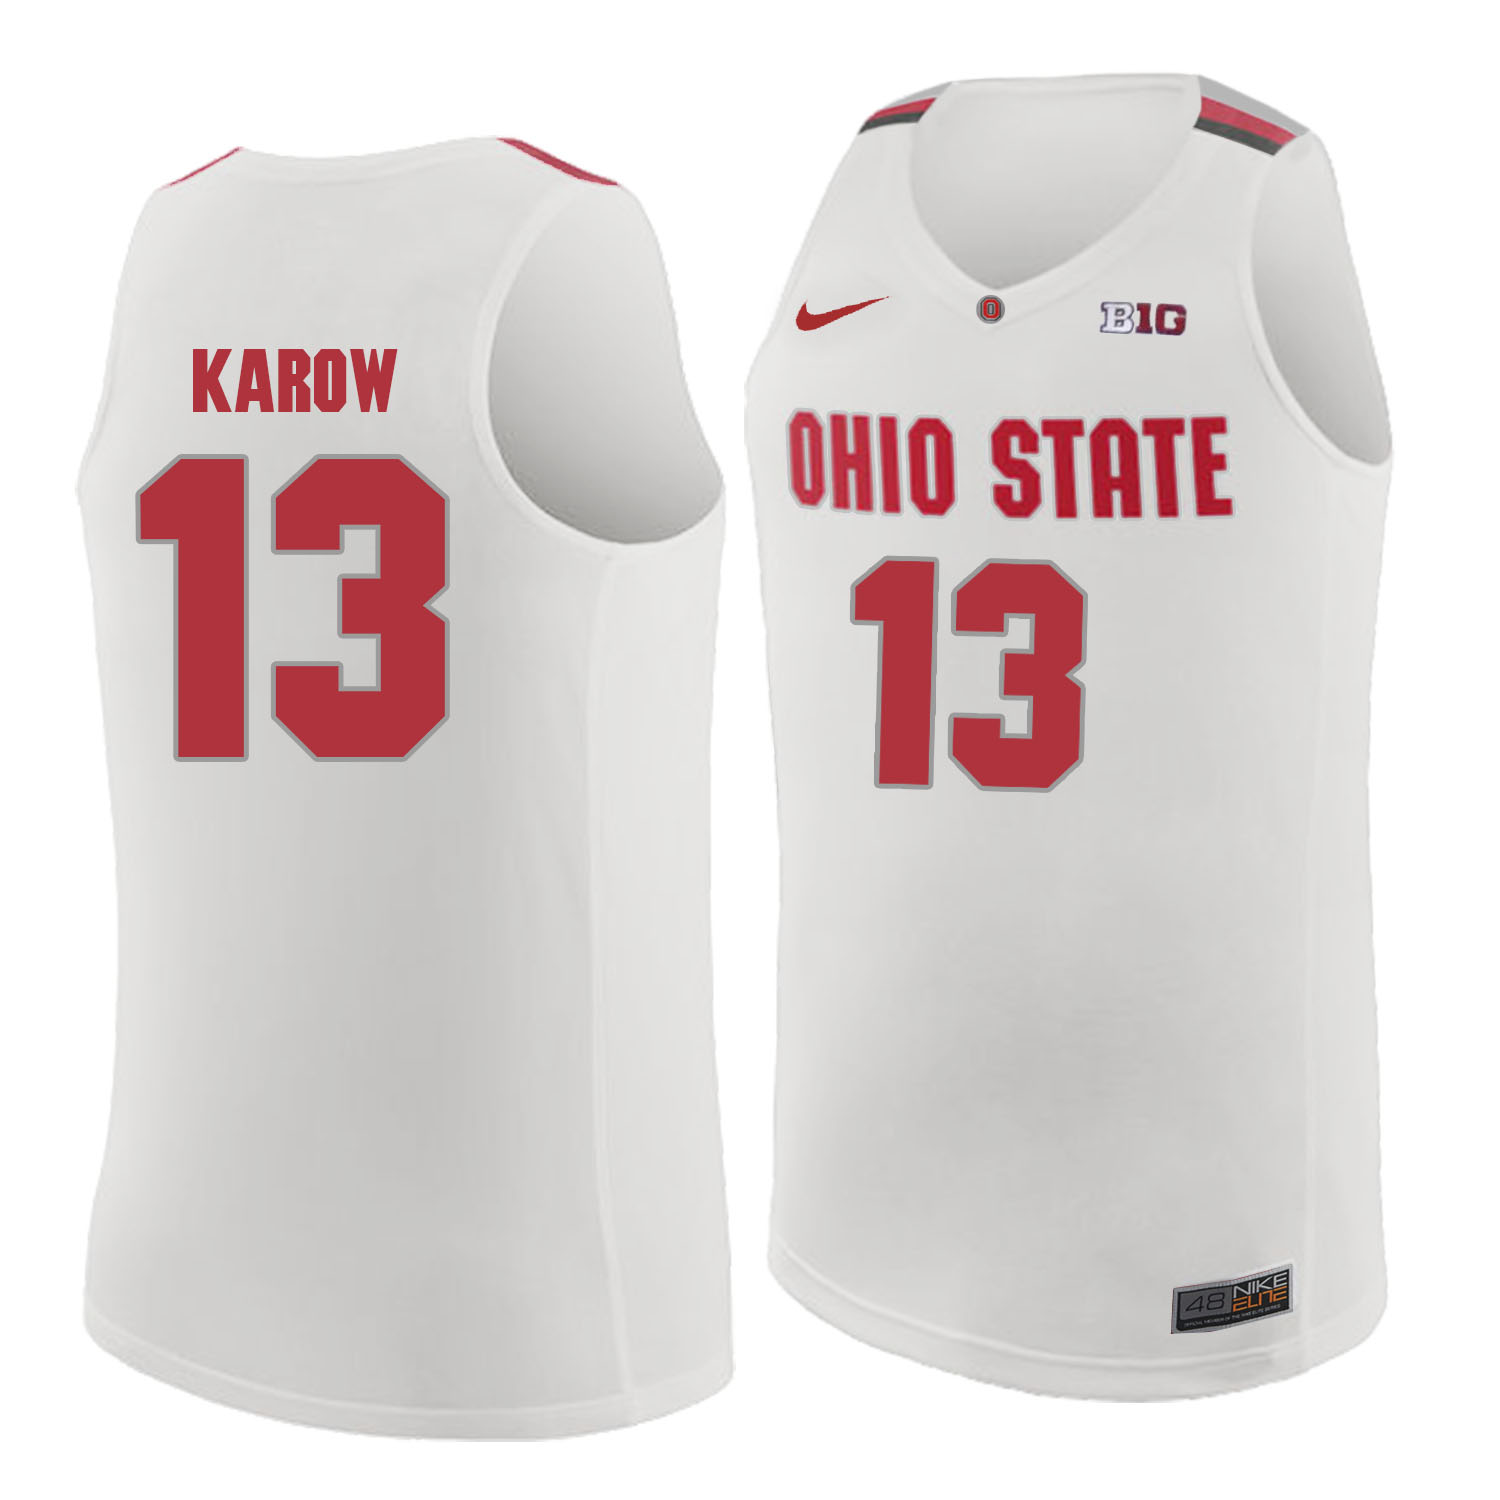 Ohio State Buckeyes 13 Marty Karow White College Basketball Jersey